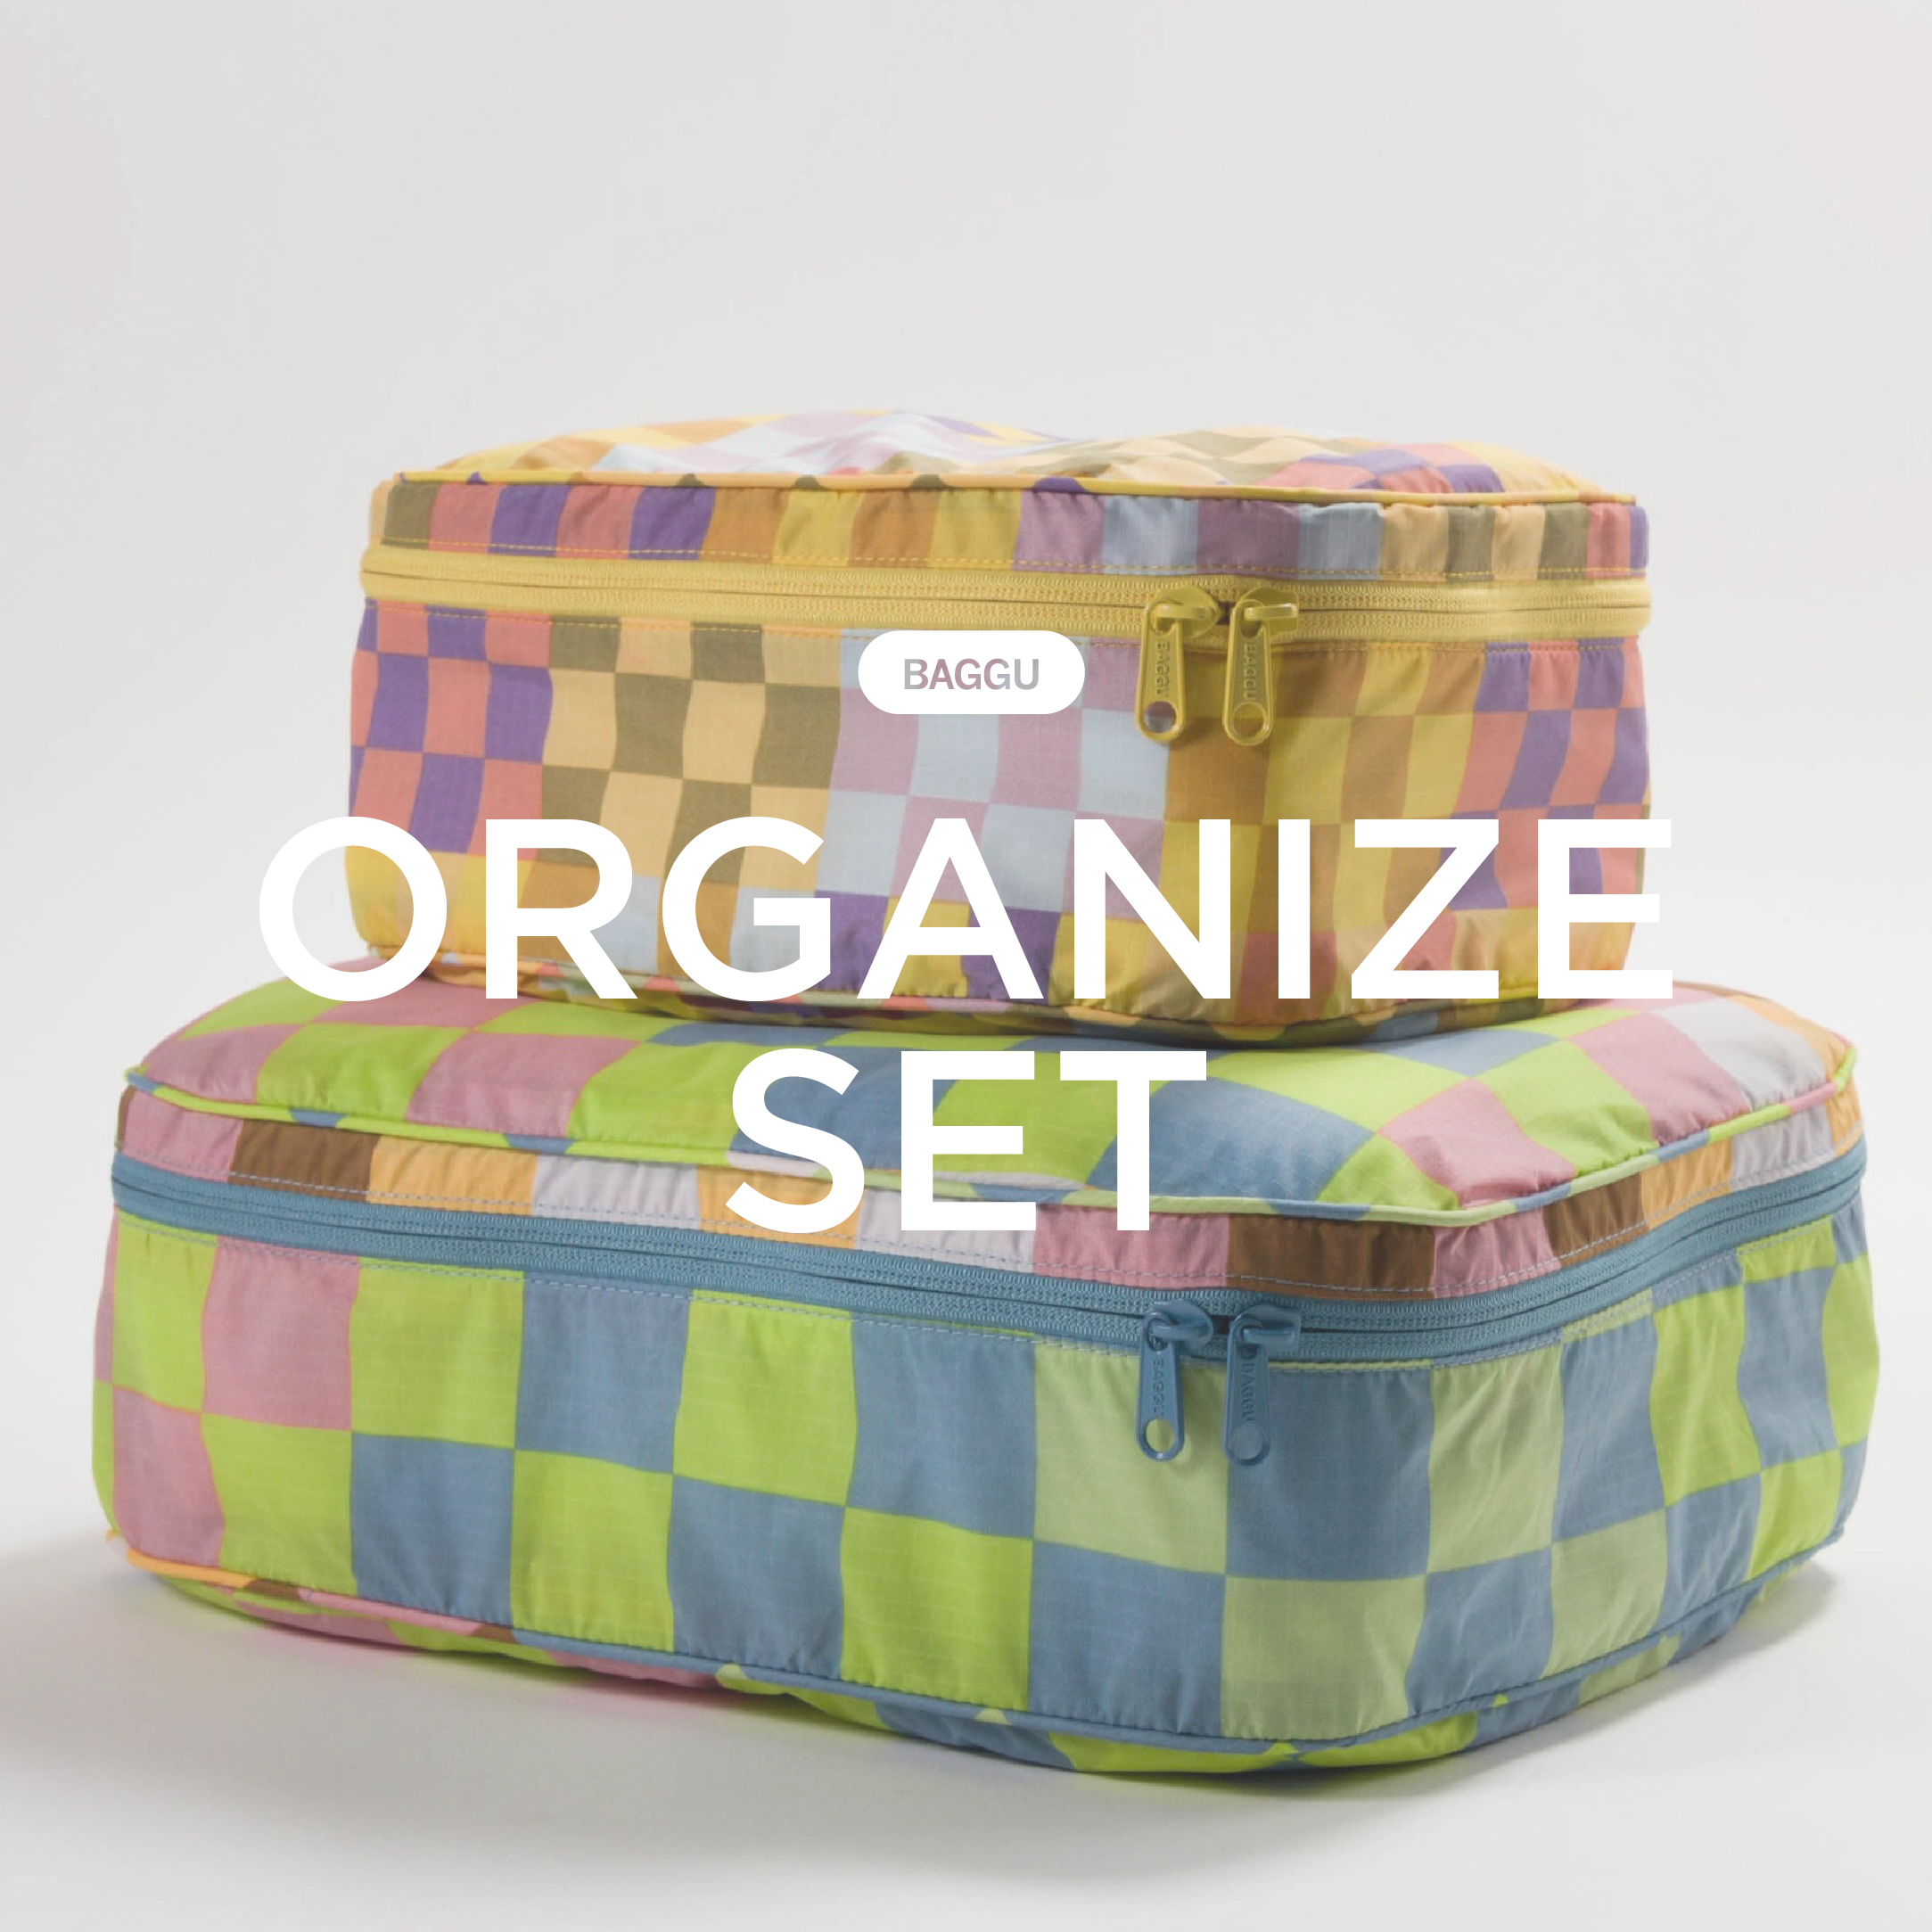 Organize Set